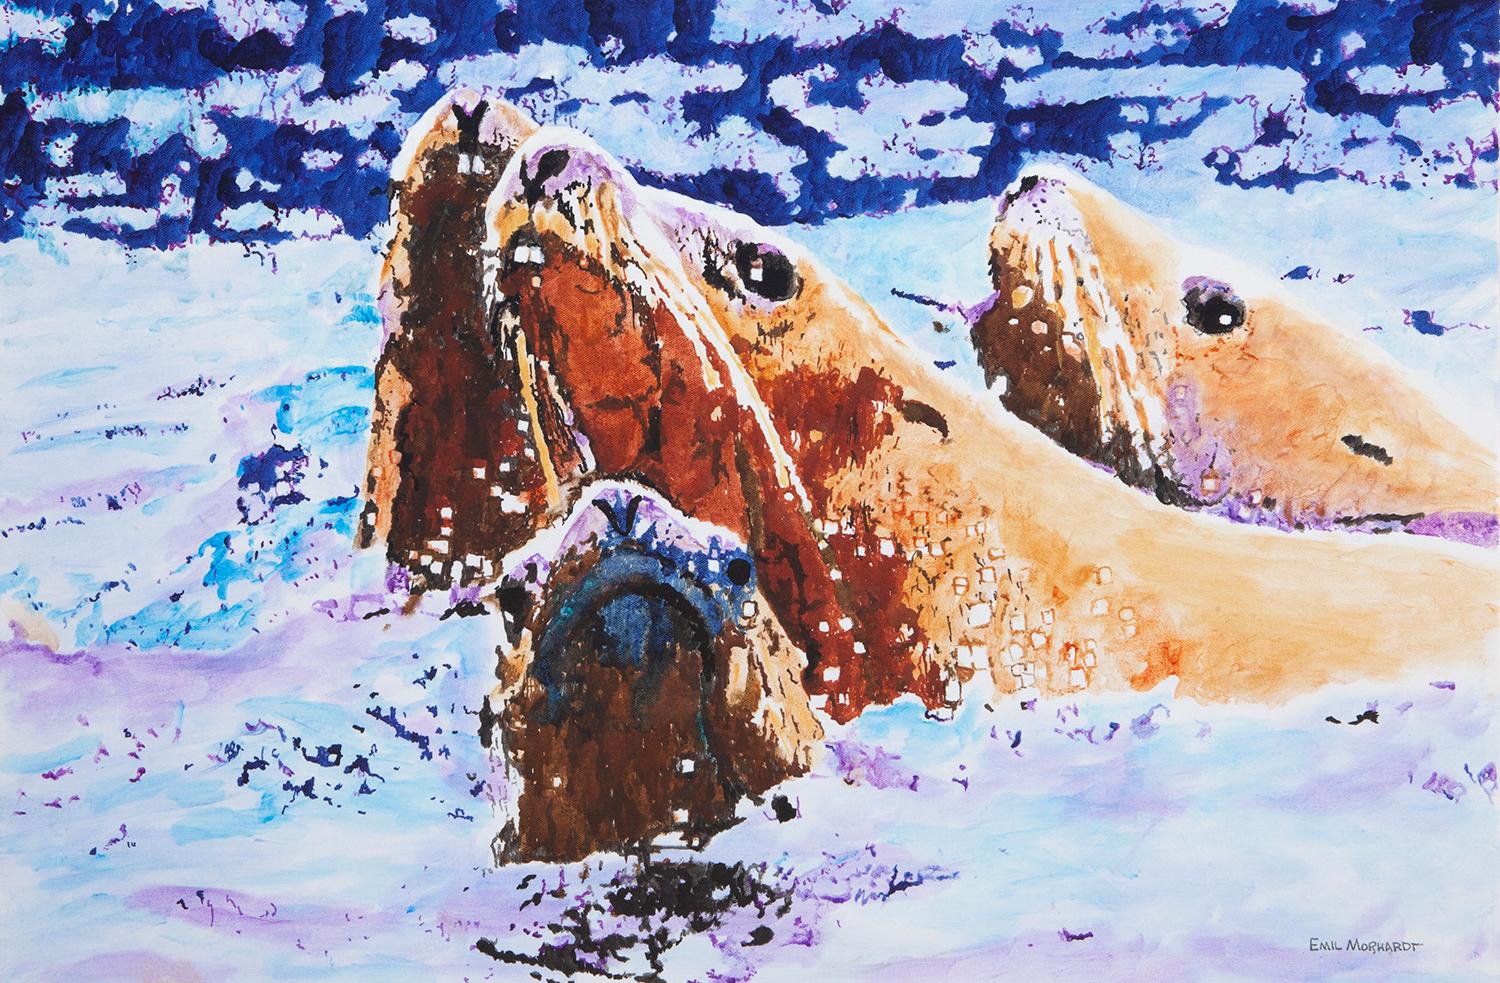 Emil Morhardt Animal Painting - Steller Sea Lions at Sea, Original Painting